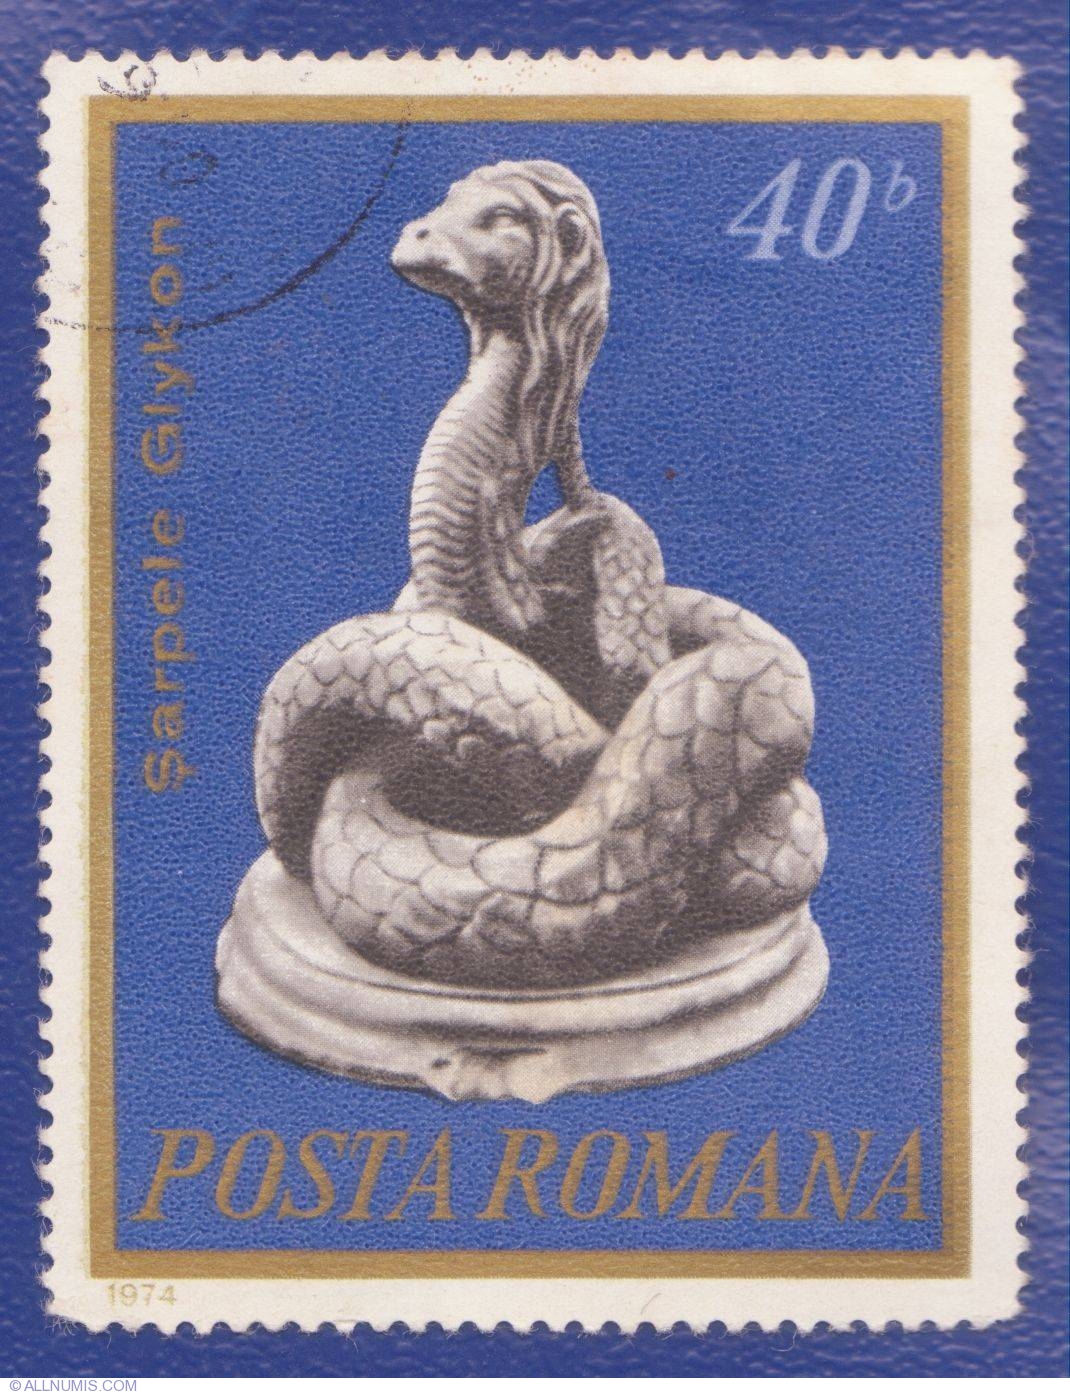 40 Bani 1974 - Arheologia din românia - Şarpele Glykon, 1974 - Romania ...